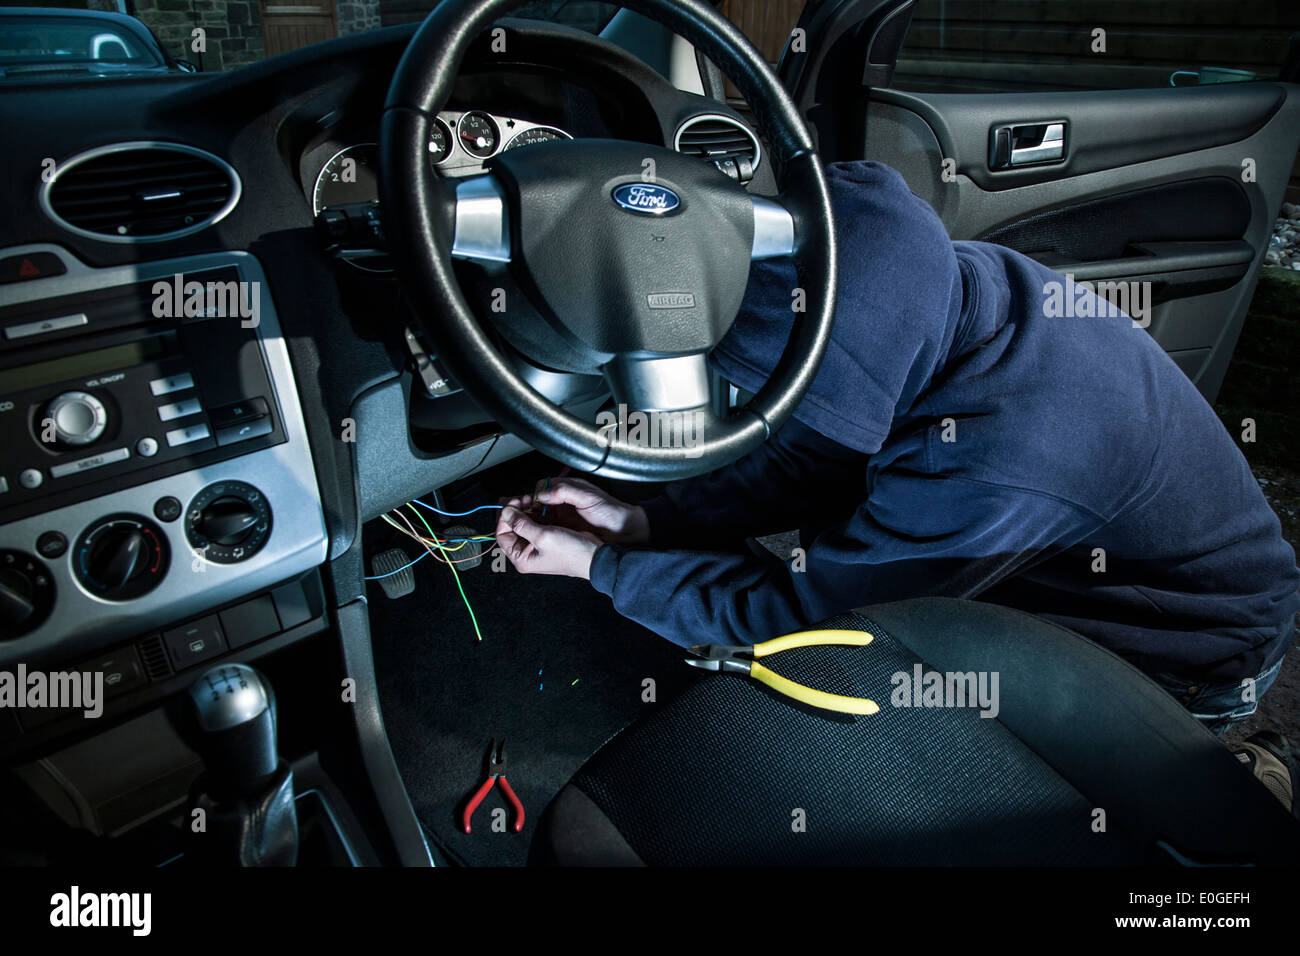 A man wearing a hoody hot wiring a car. Stock Photo